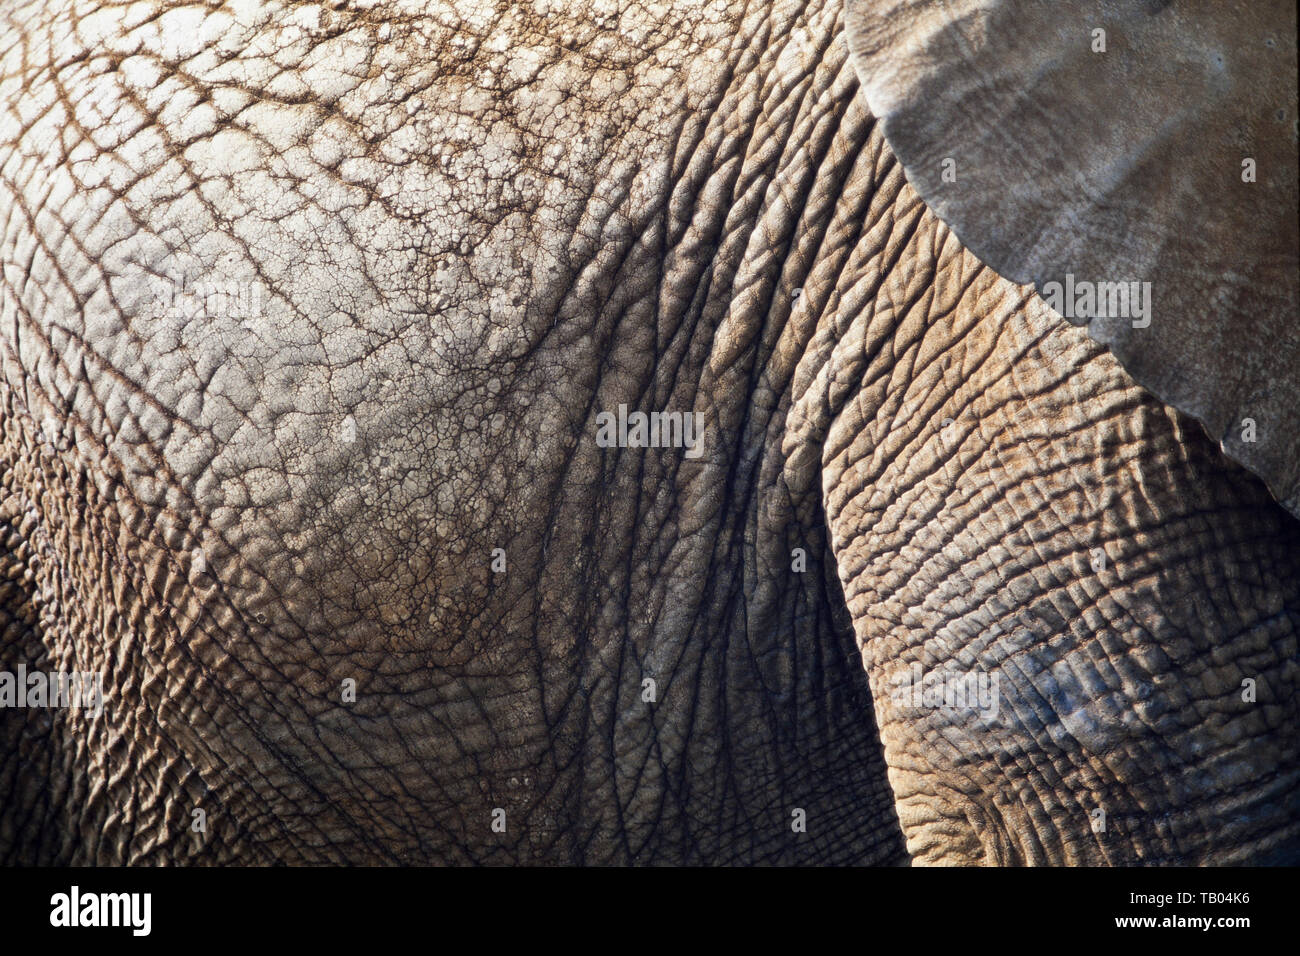 Elefante africano, Loxodonta africana, Dettaglio pelle Foto Stock